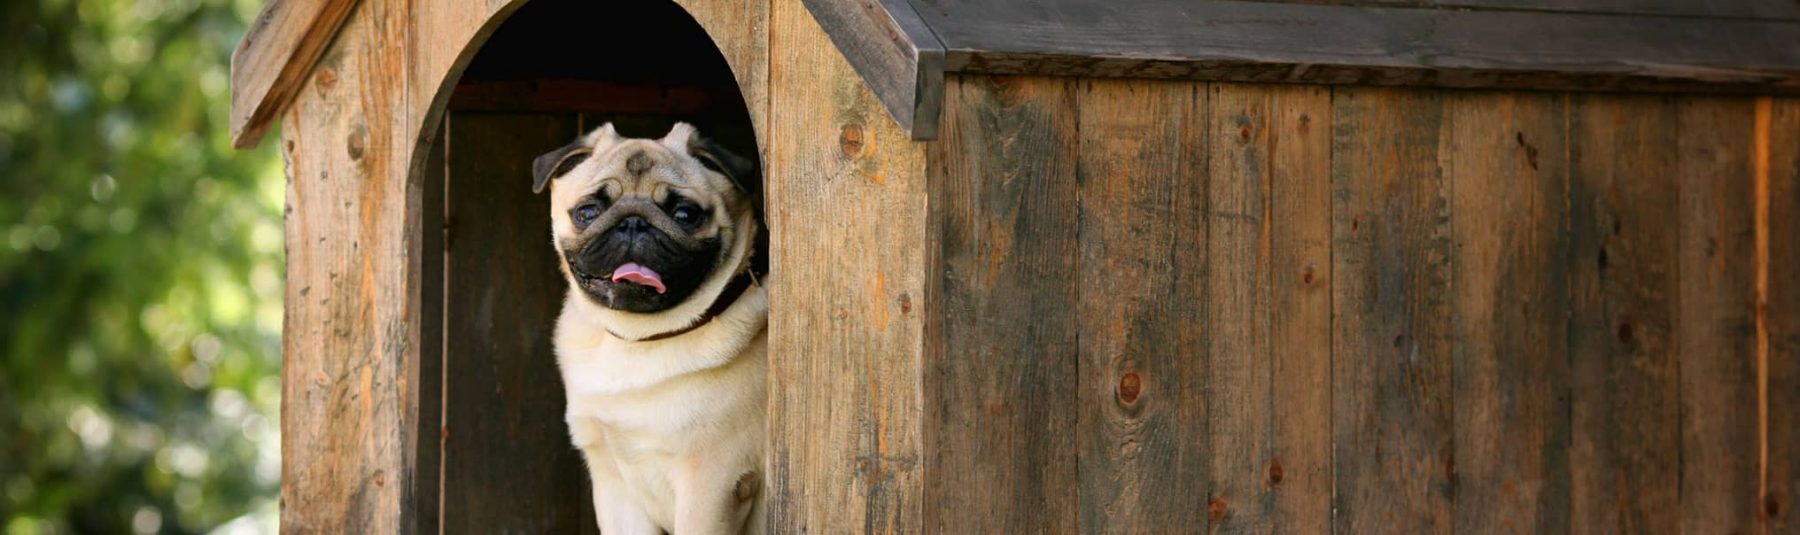 Happy pug sitting in a dog house